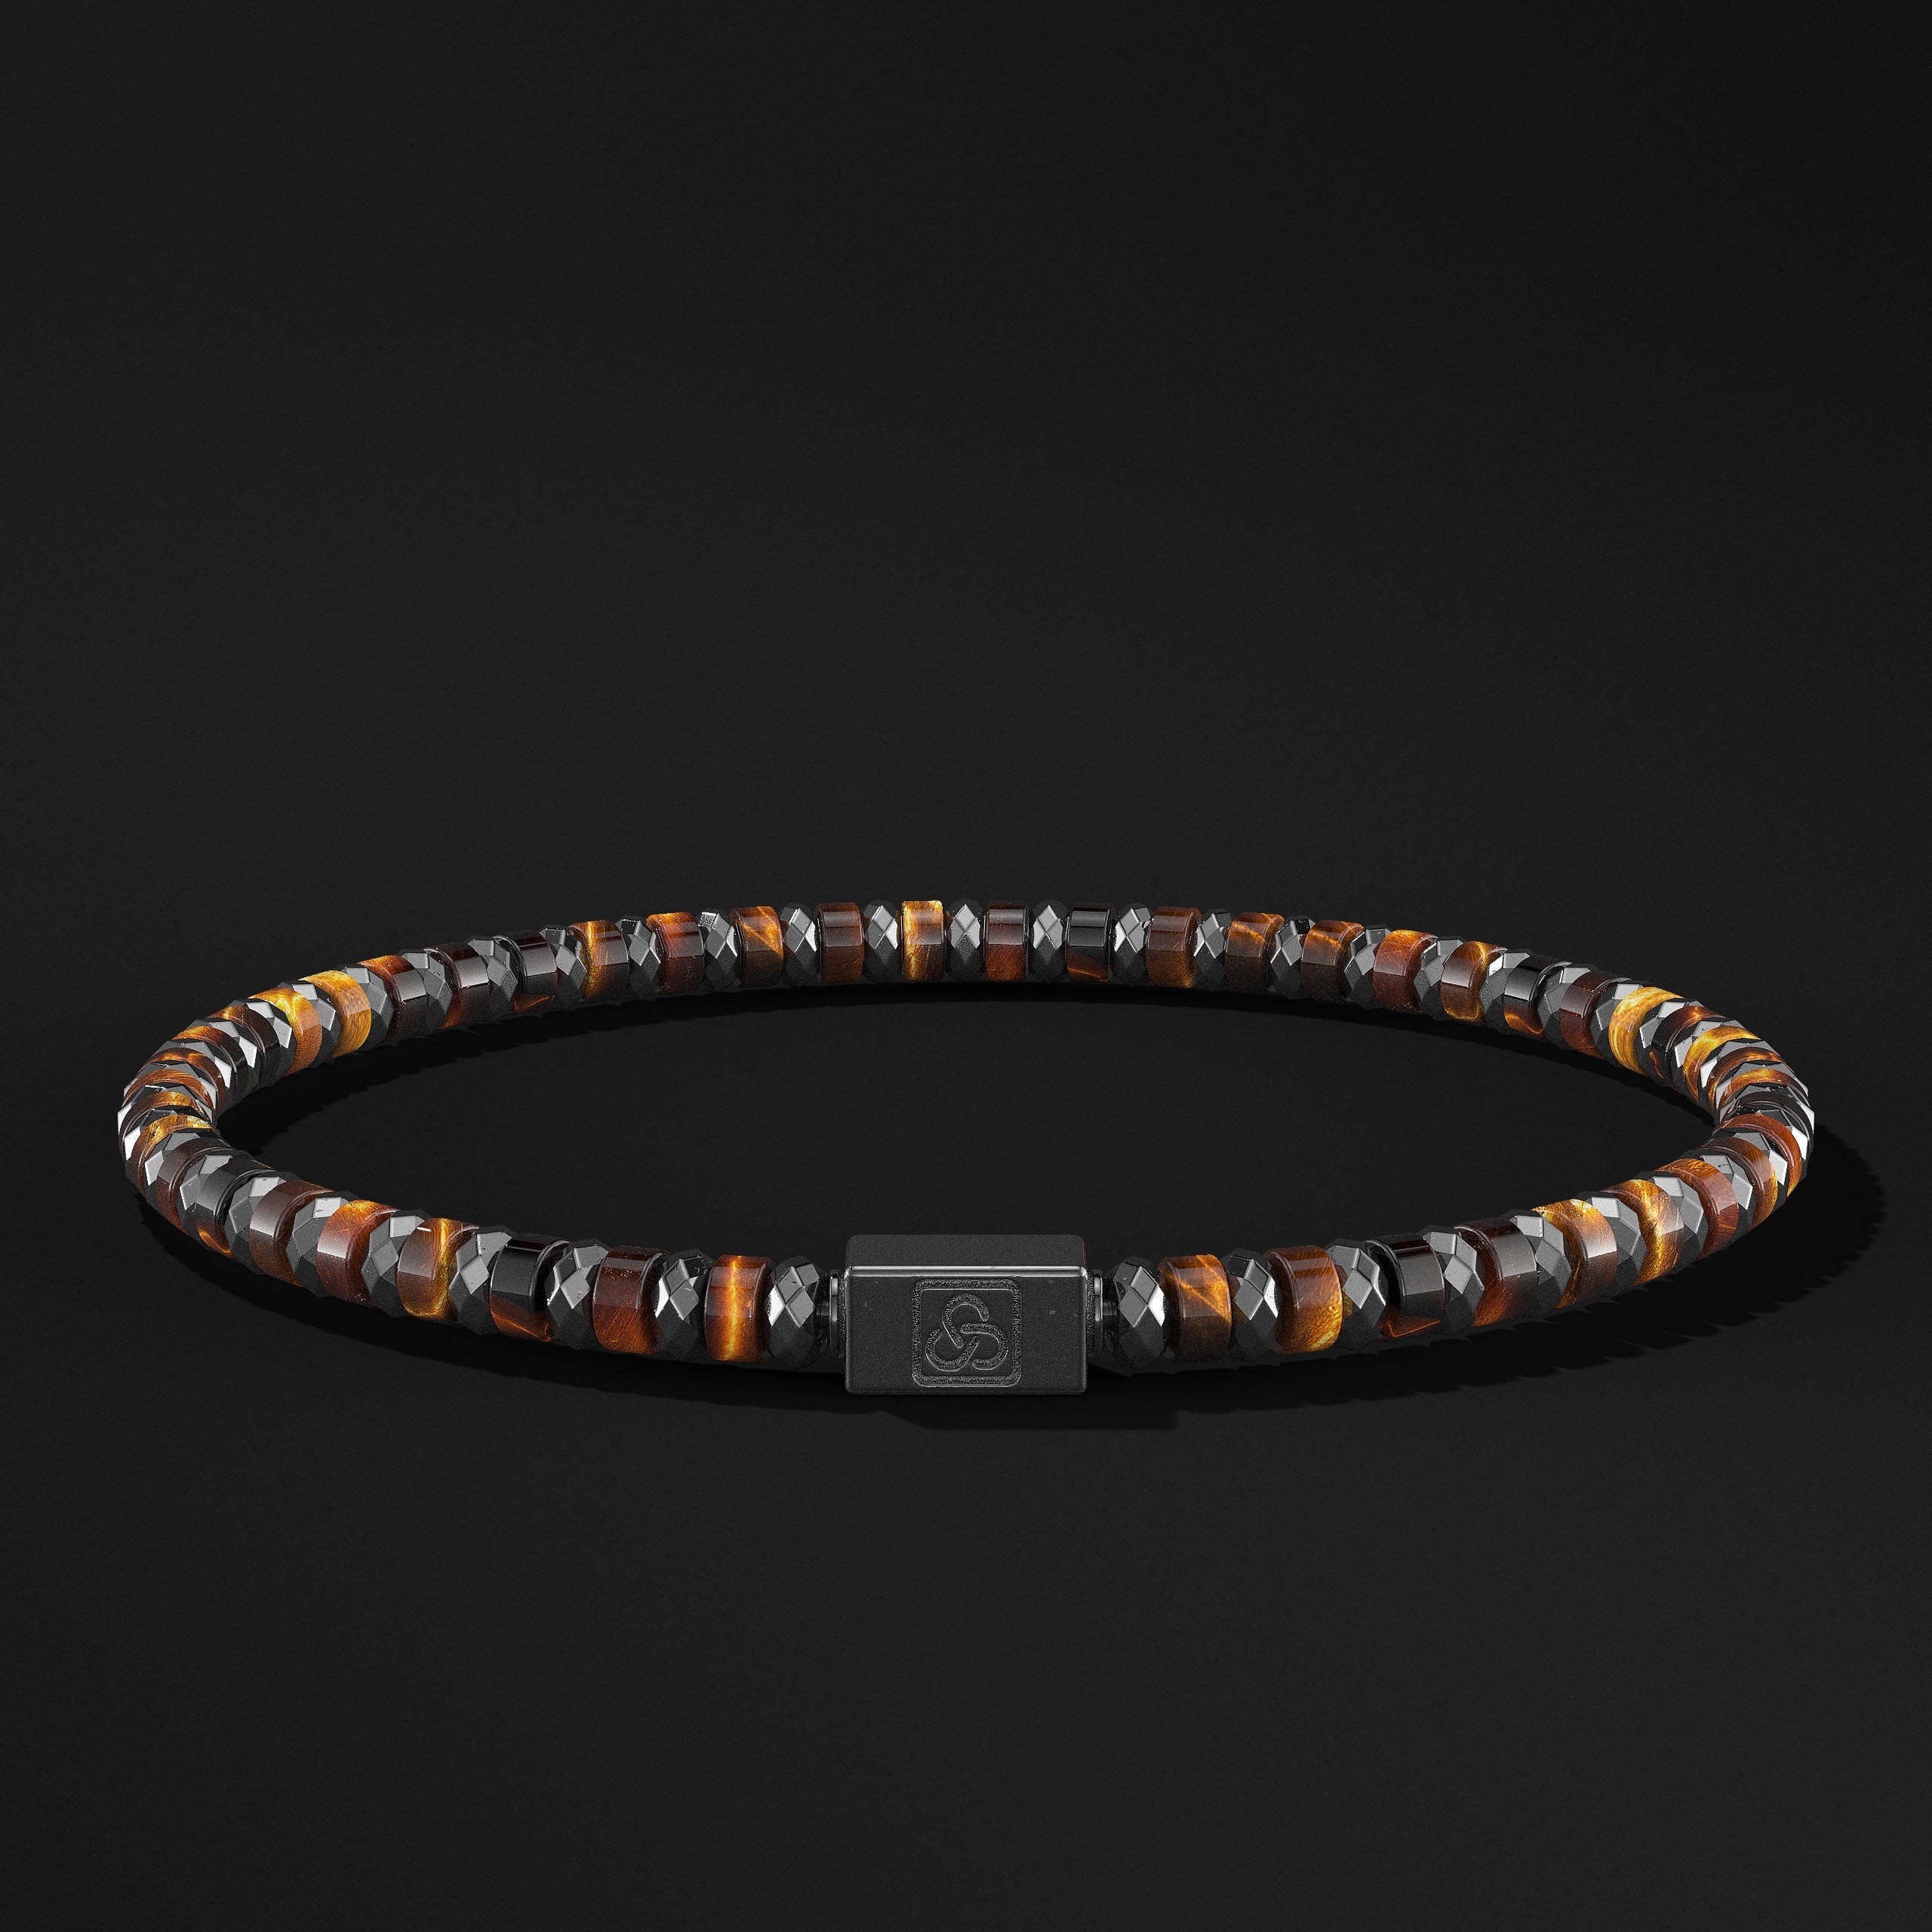 Spacer Beads Black Rhodium Bracelet 4mm